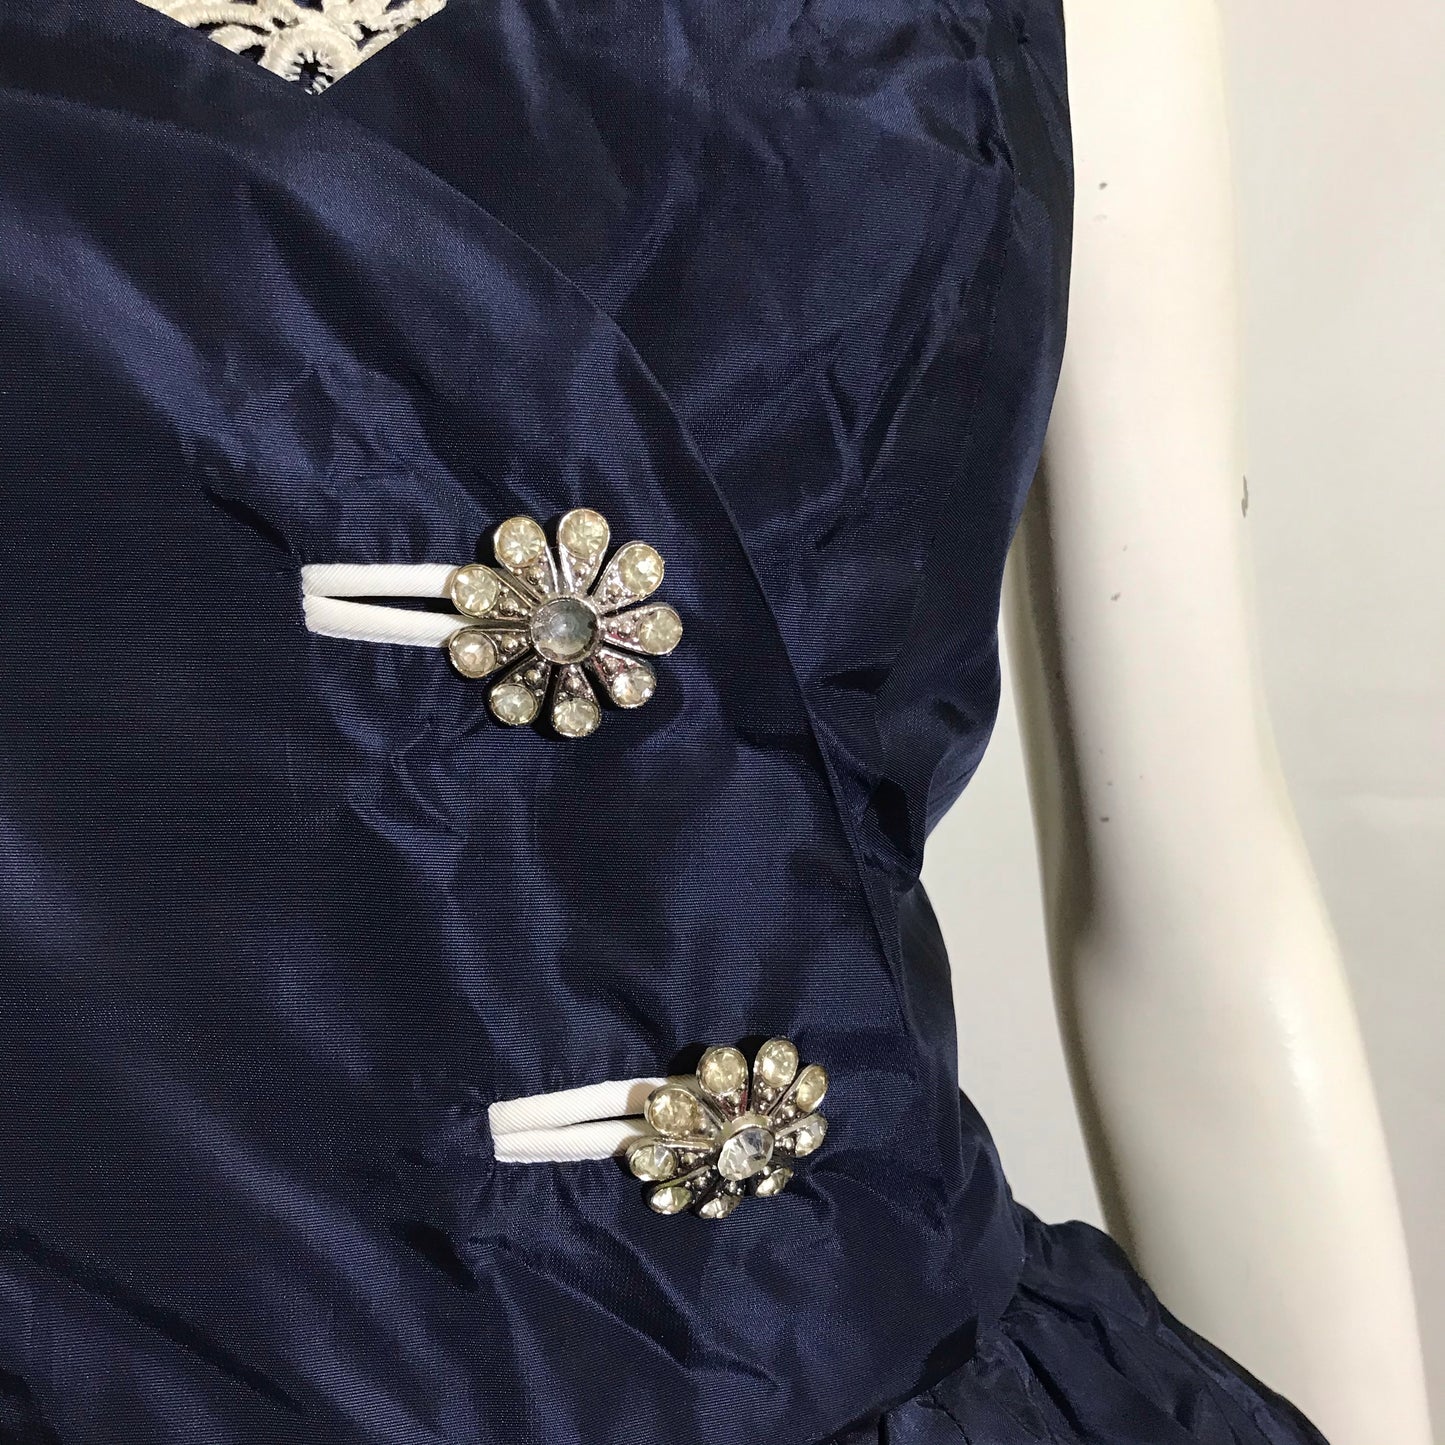 Rhinestone Button Trimmed Deep Blue Taffeta Cocktail Dress with Swagged Skirt circa 1940s